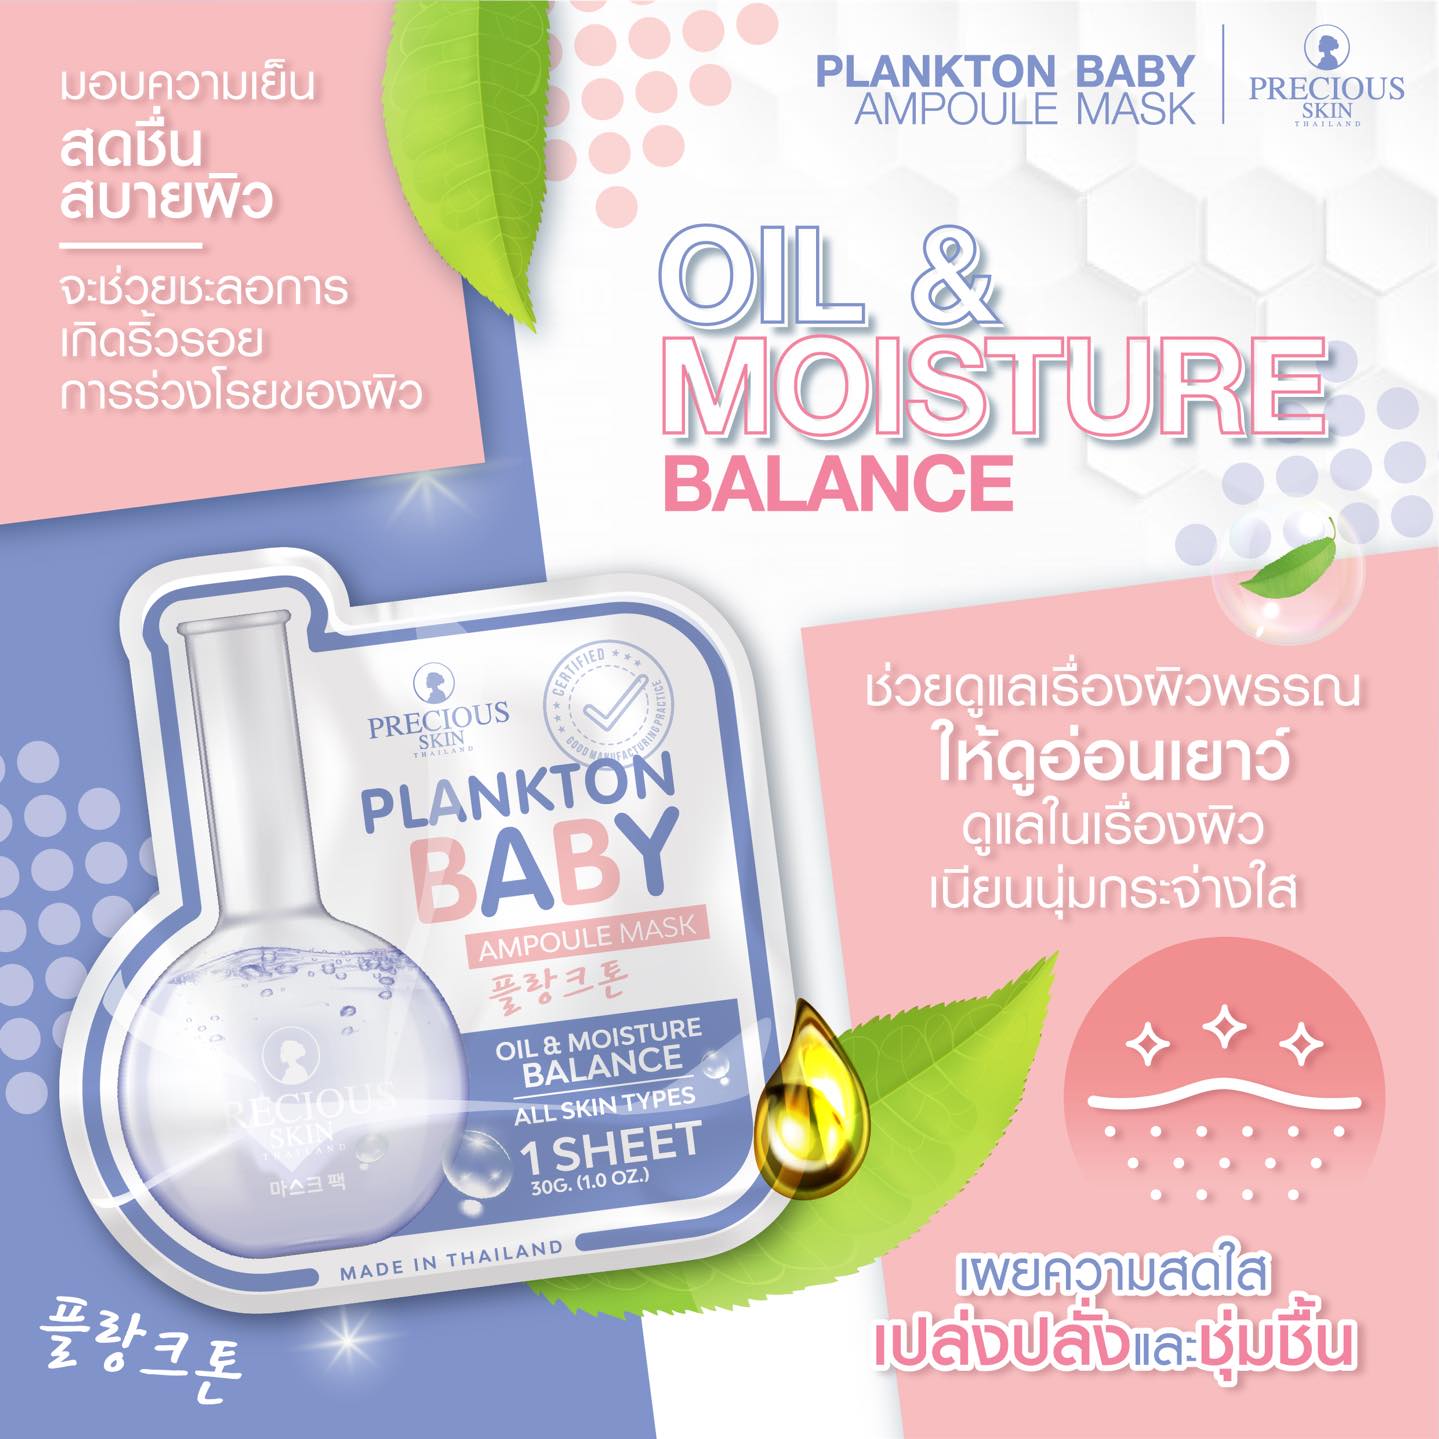 Precious Skin Thailand Plankton Baby Ampoule Mask